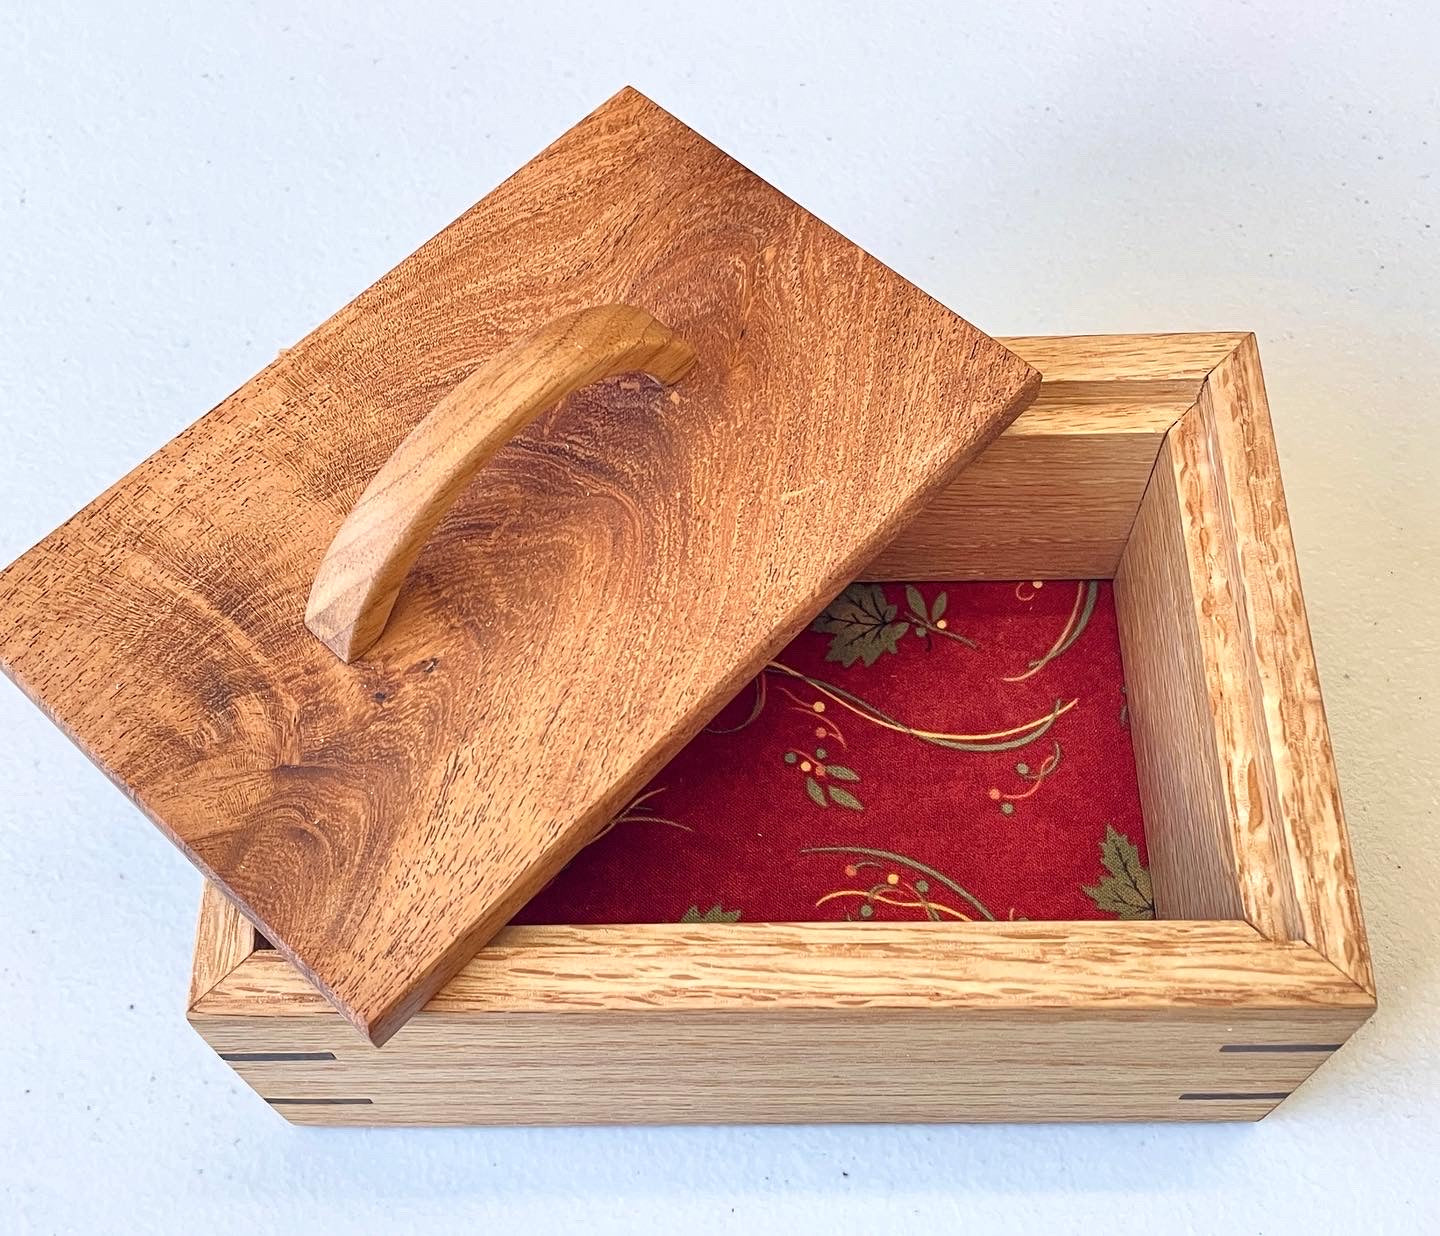 7x5x3 Red oak/Mesquite, fabric lined keepsake box